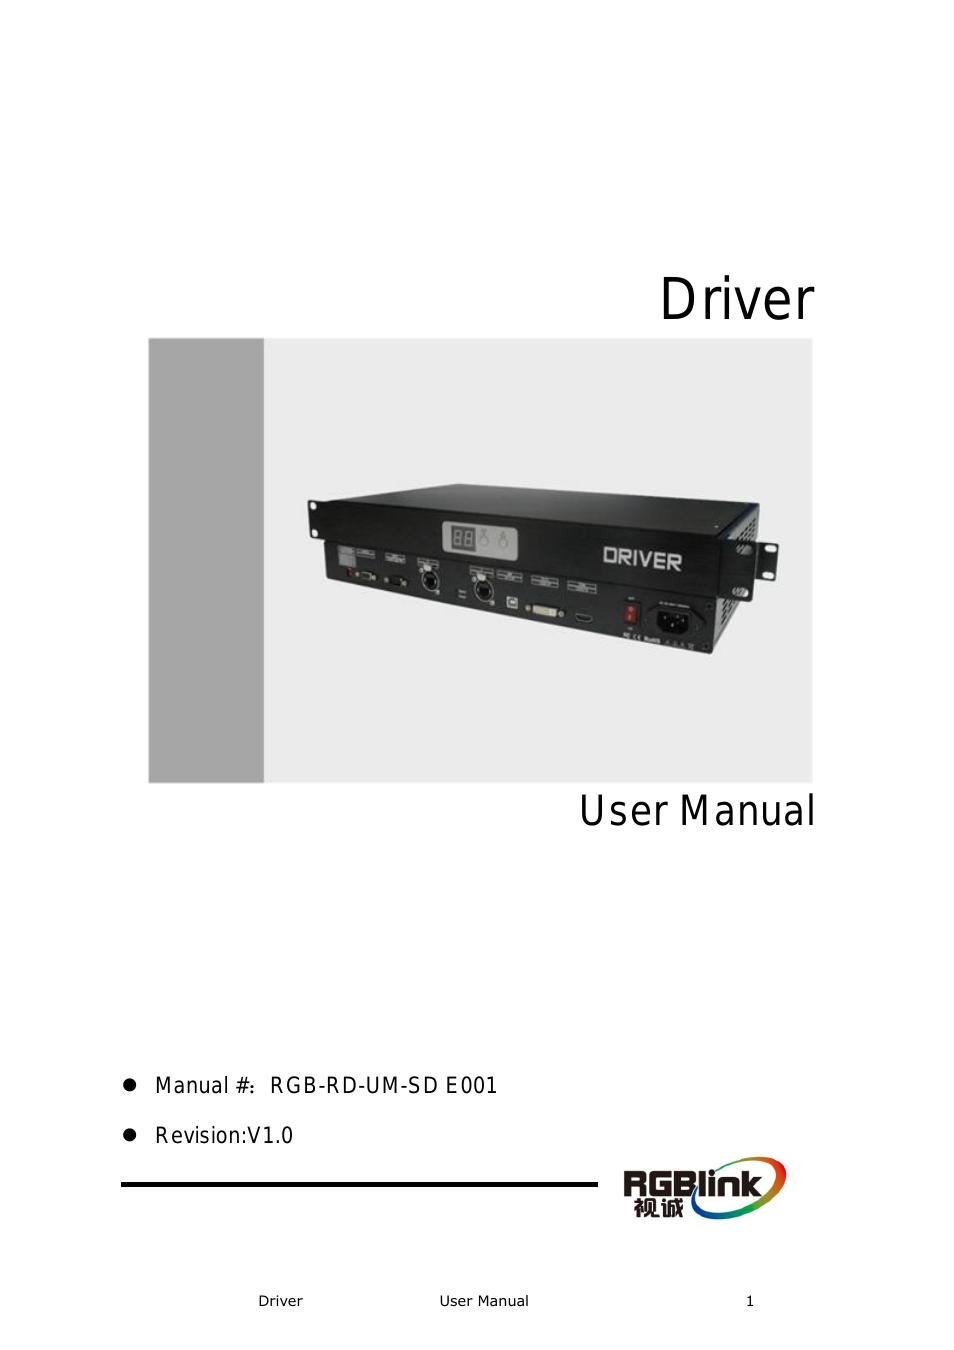 Driver 2A User Manual